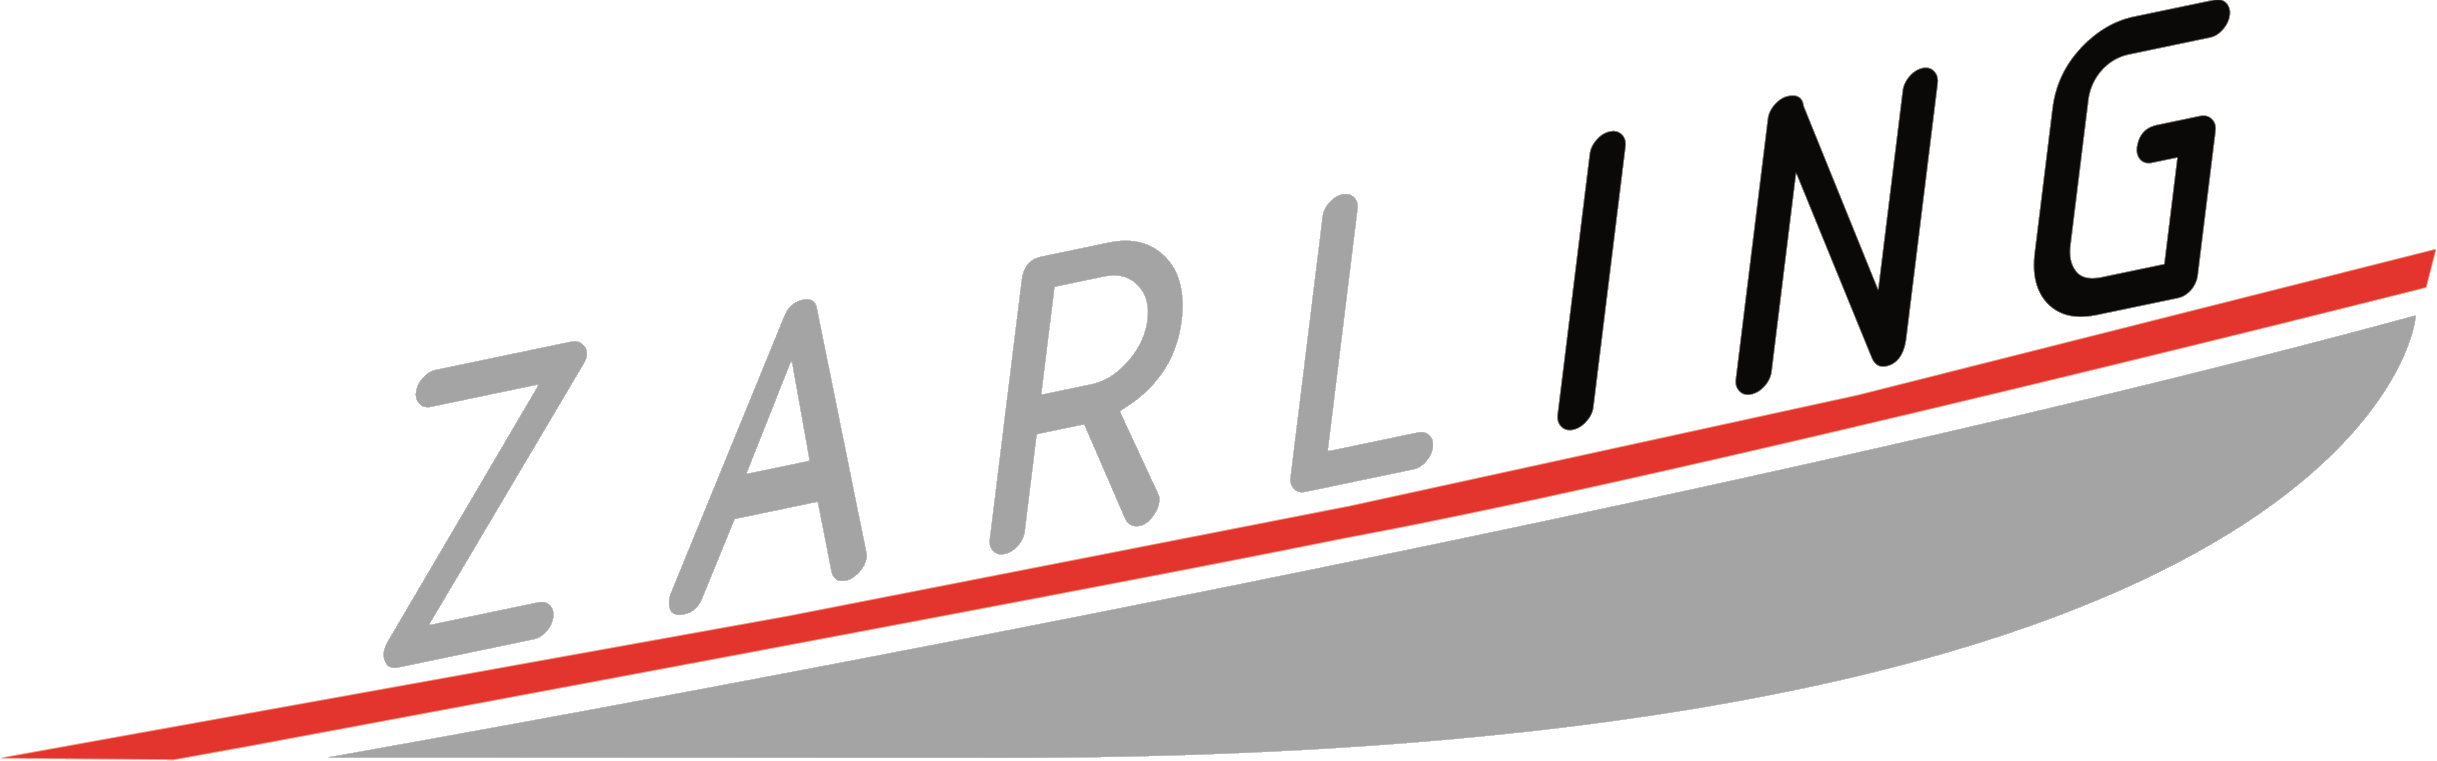 Logo Zarling